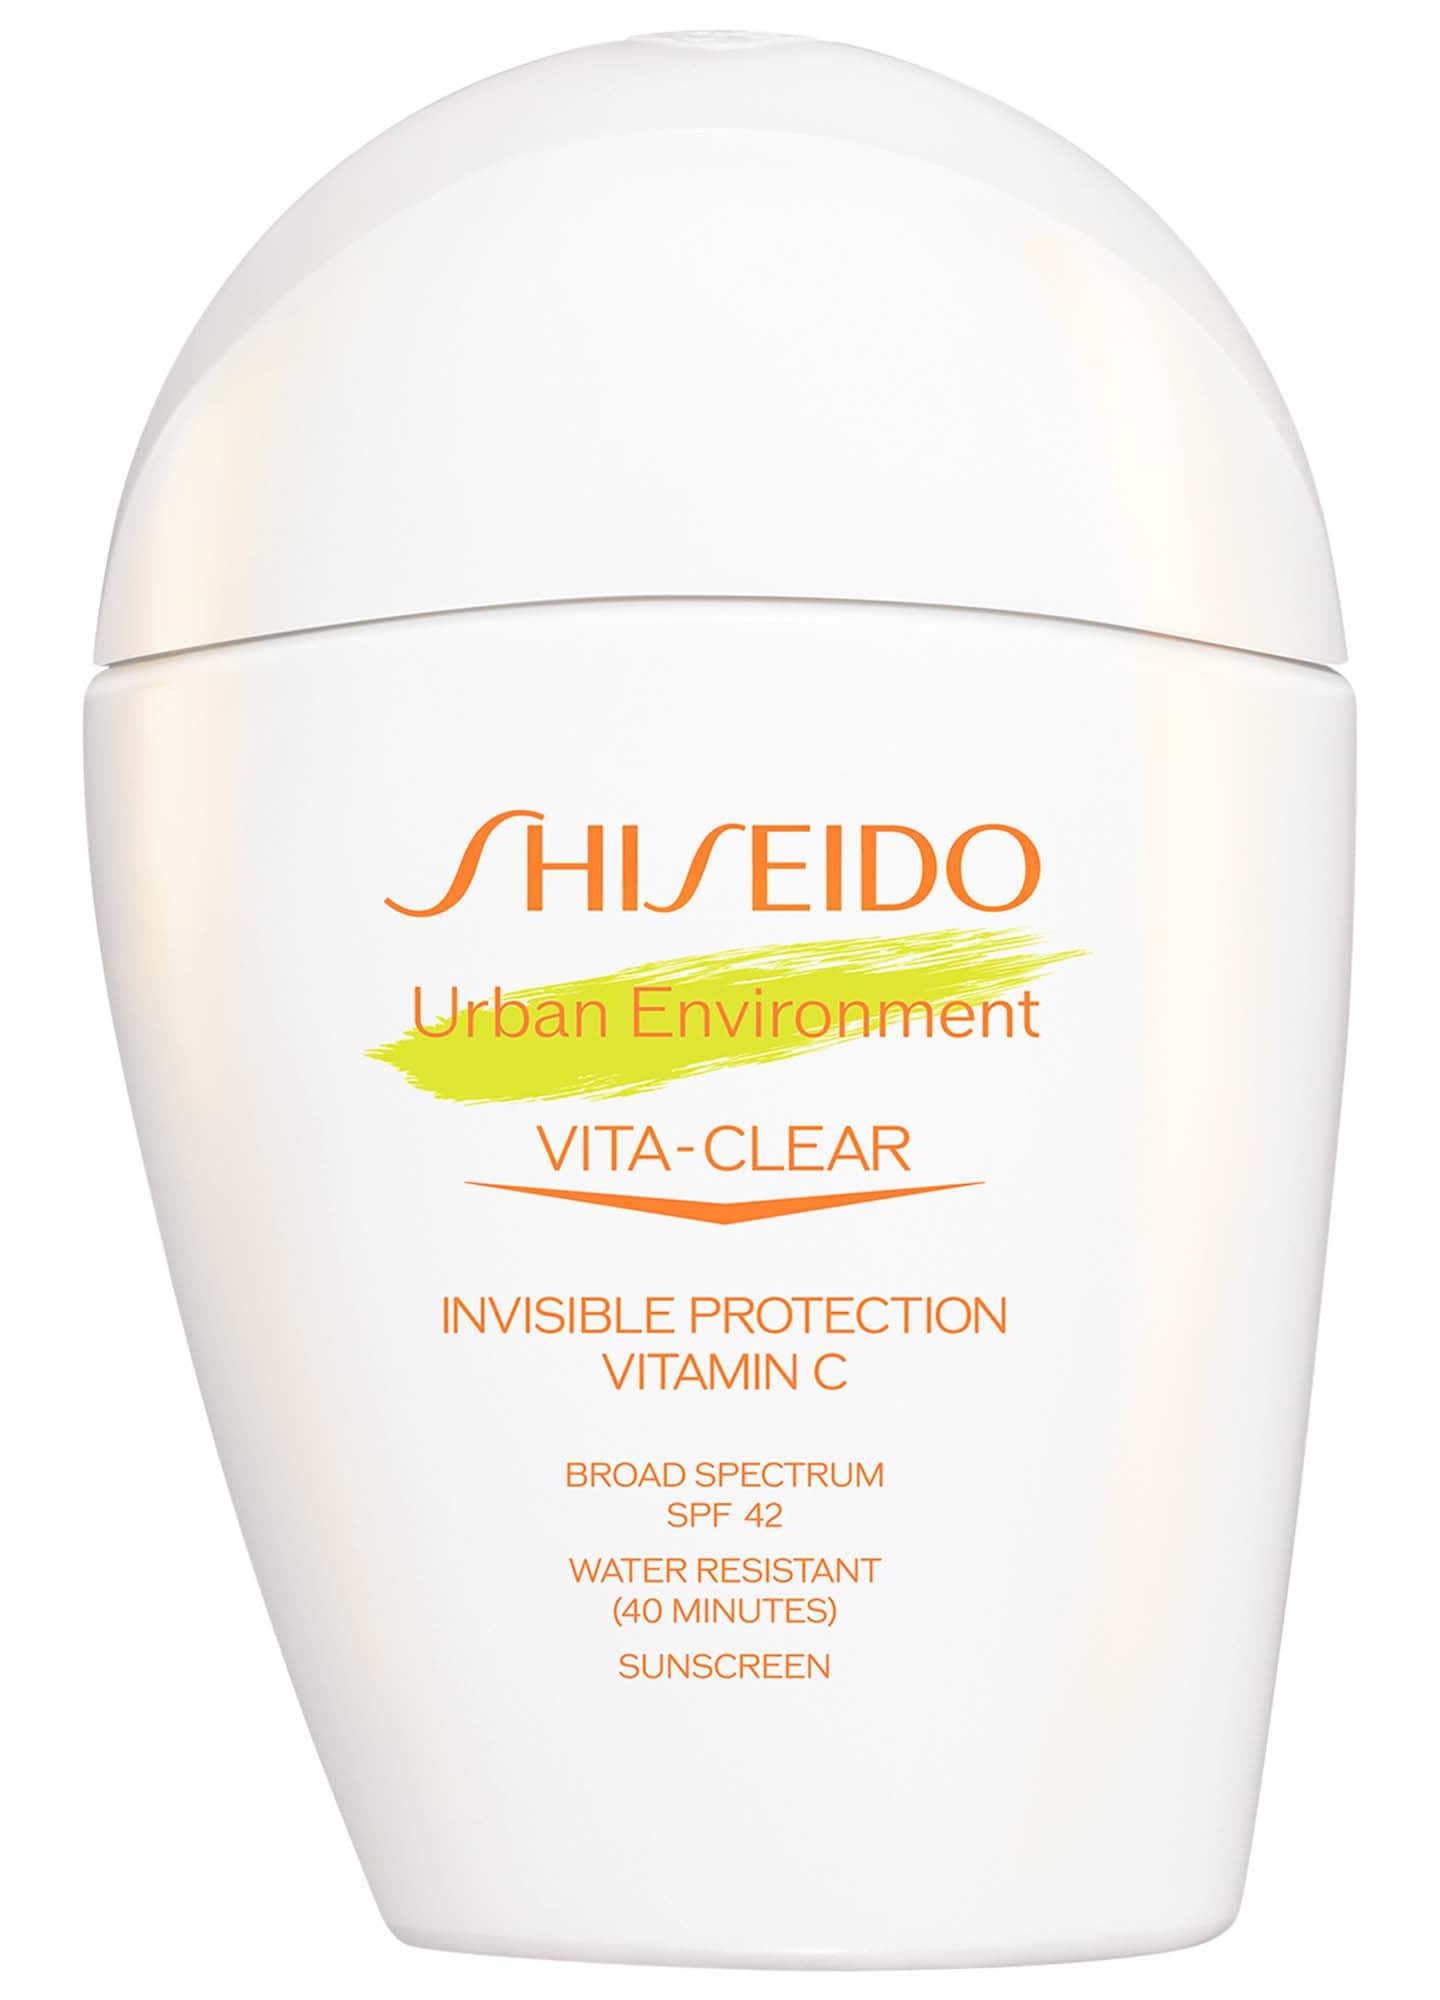 Shiseido Urban Environment Vita-clear Sunscreen SPF 42 ingredients ...